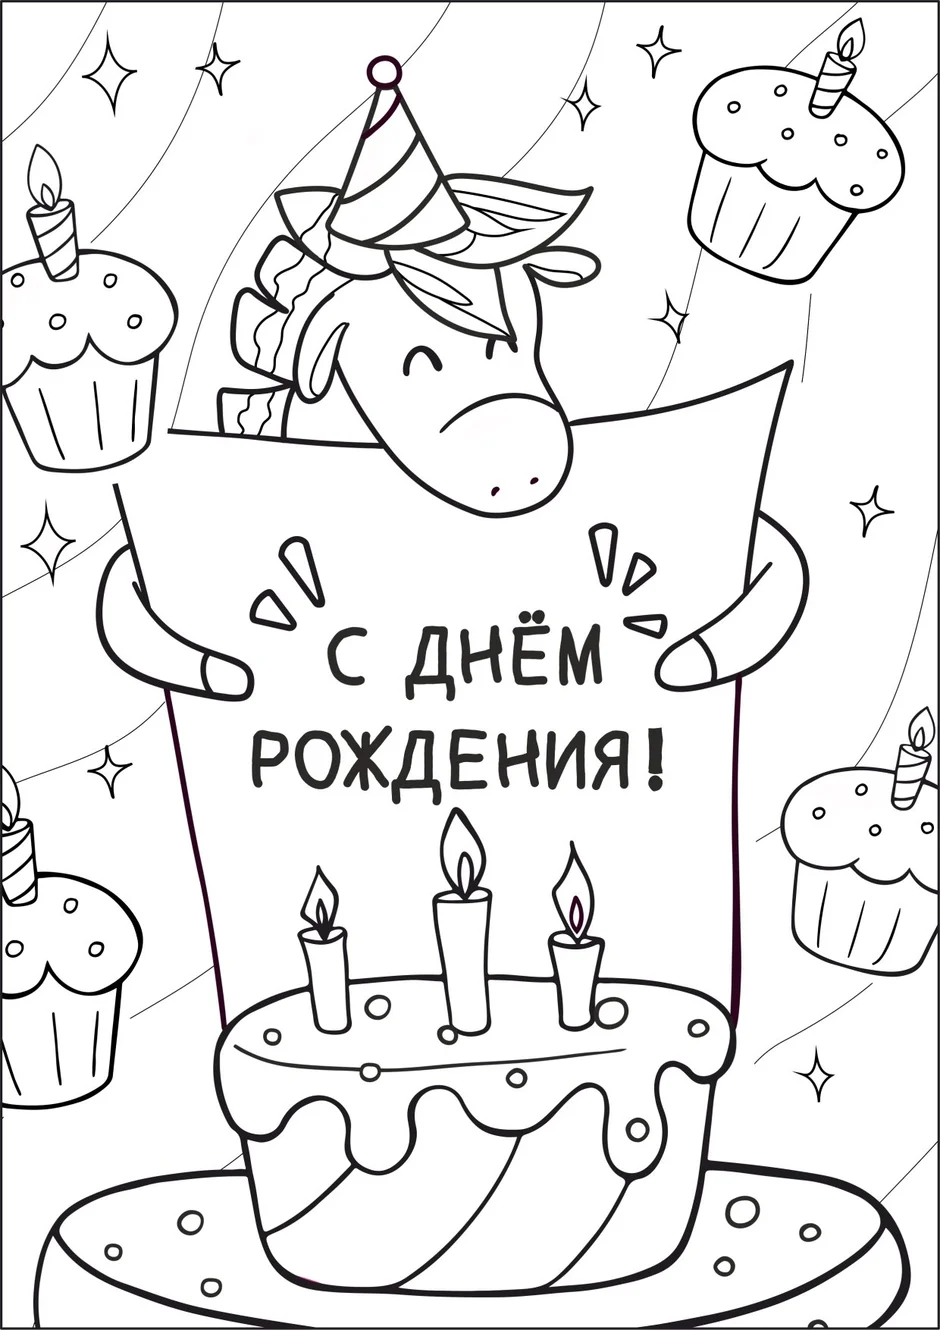 С днем рождения рисунок детский - фото и картинки prachka-mira.ru